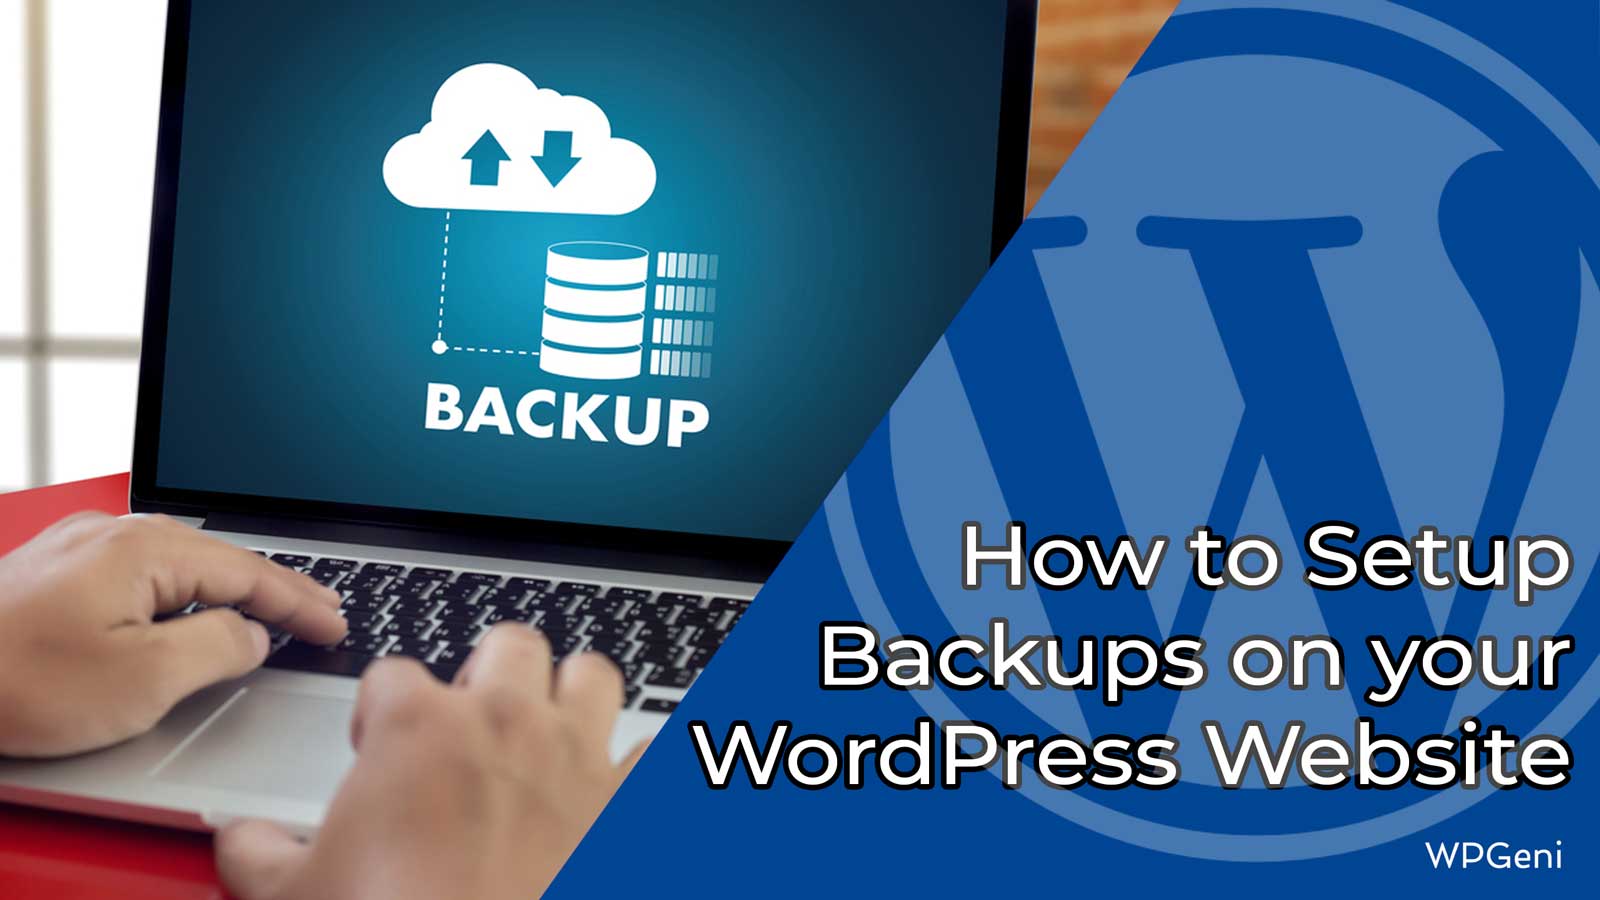 How to Setup Backups 
on your WordPress Website